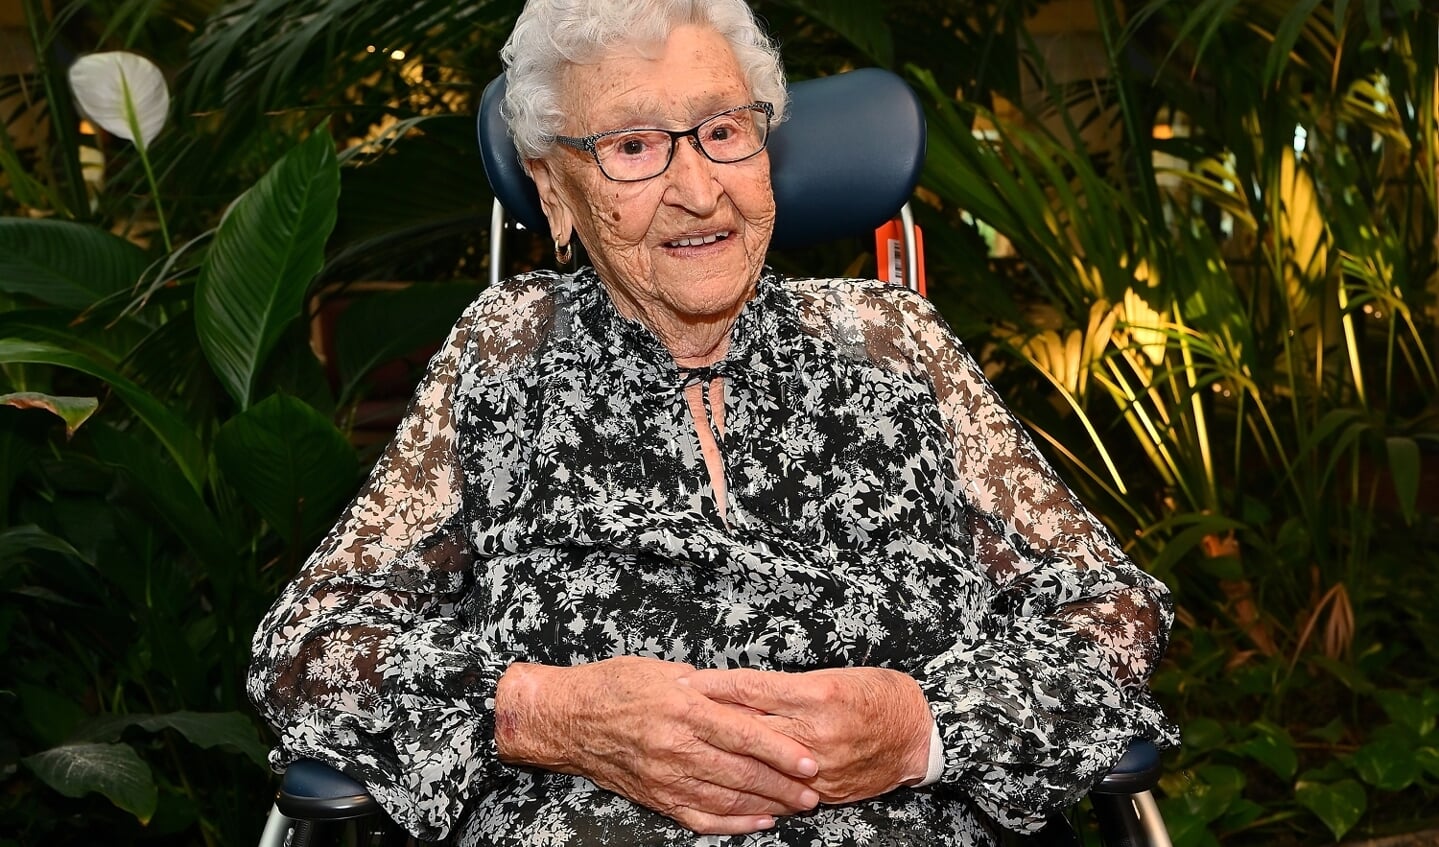  Maria Schols-Langstraat uit Capelle vierde deze week haar 100ste verjaardag.